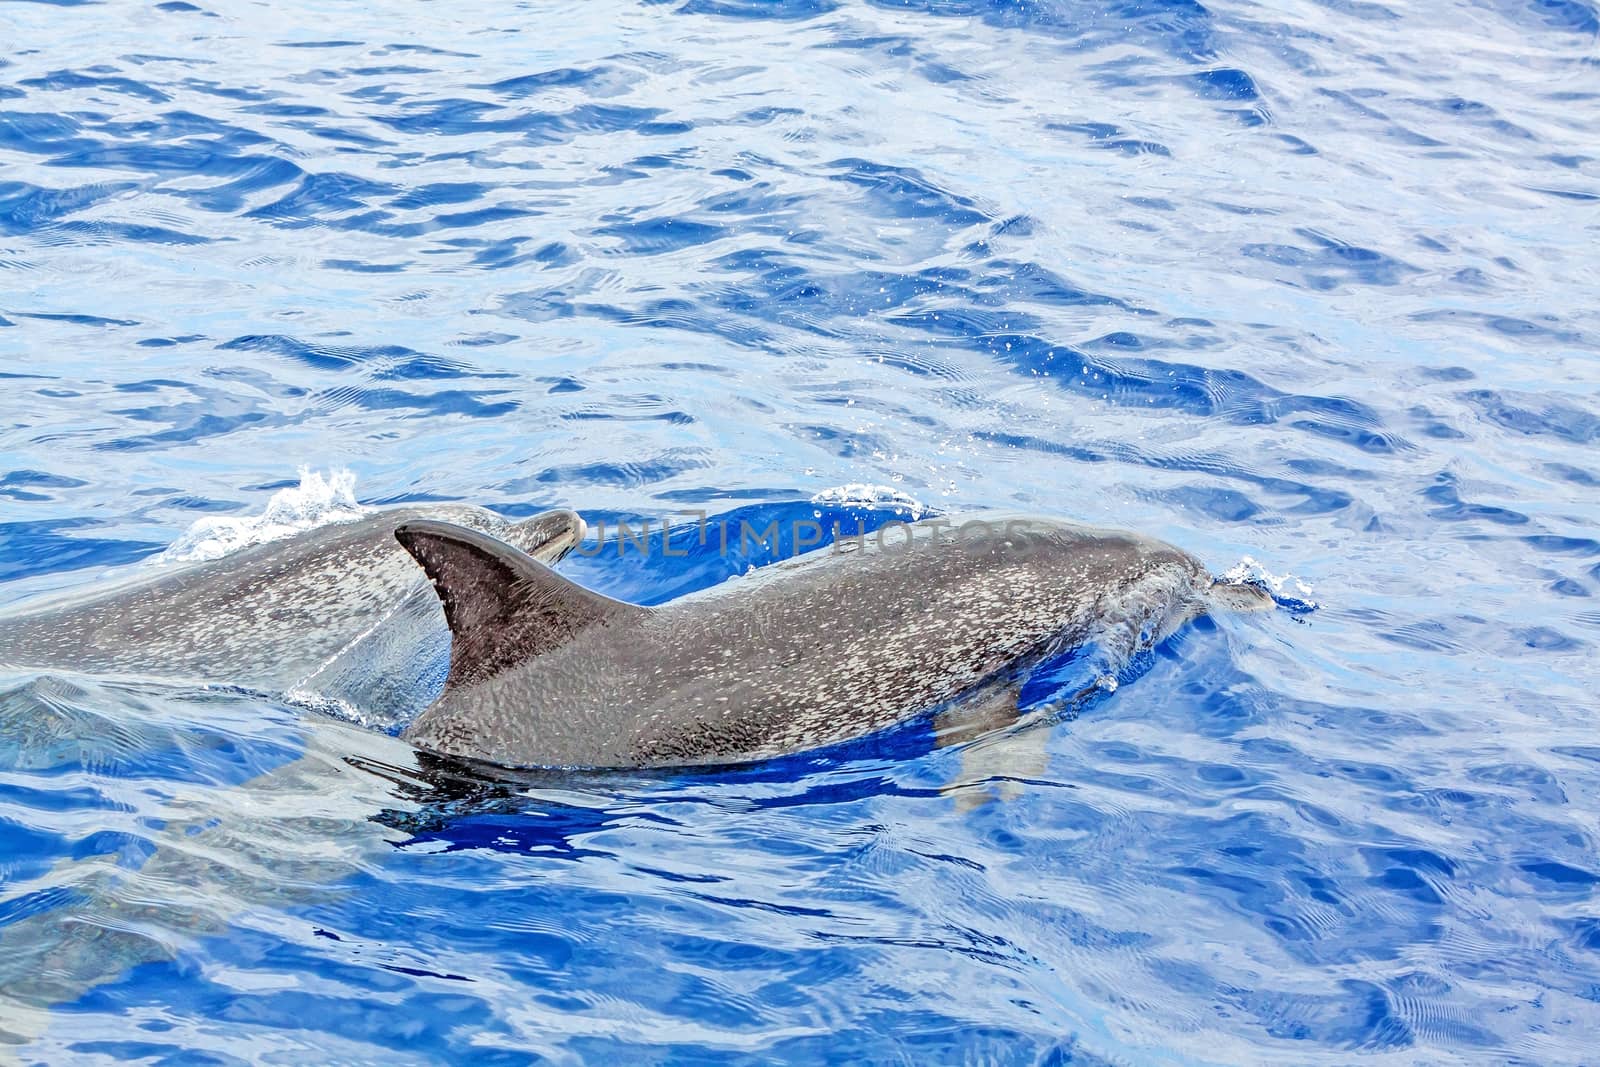 Dolphins by aldorado